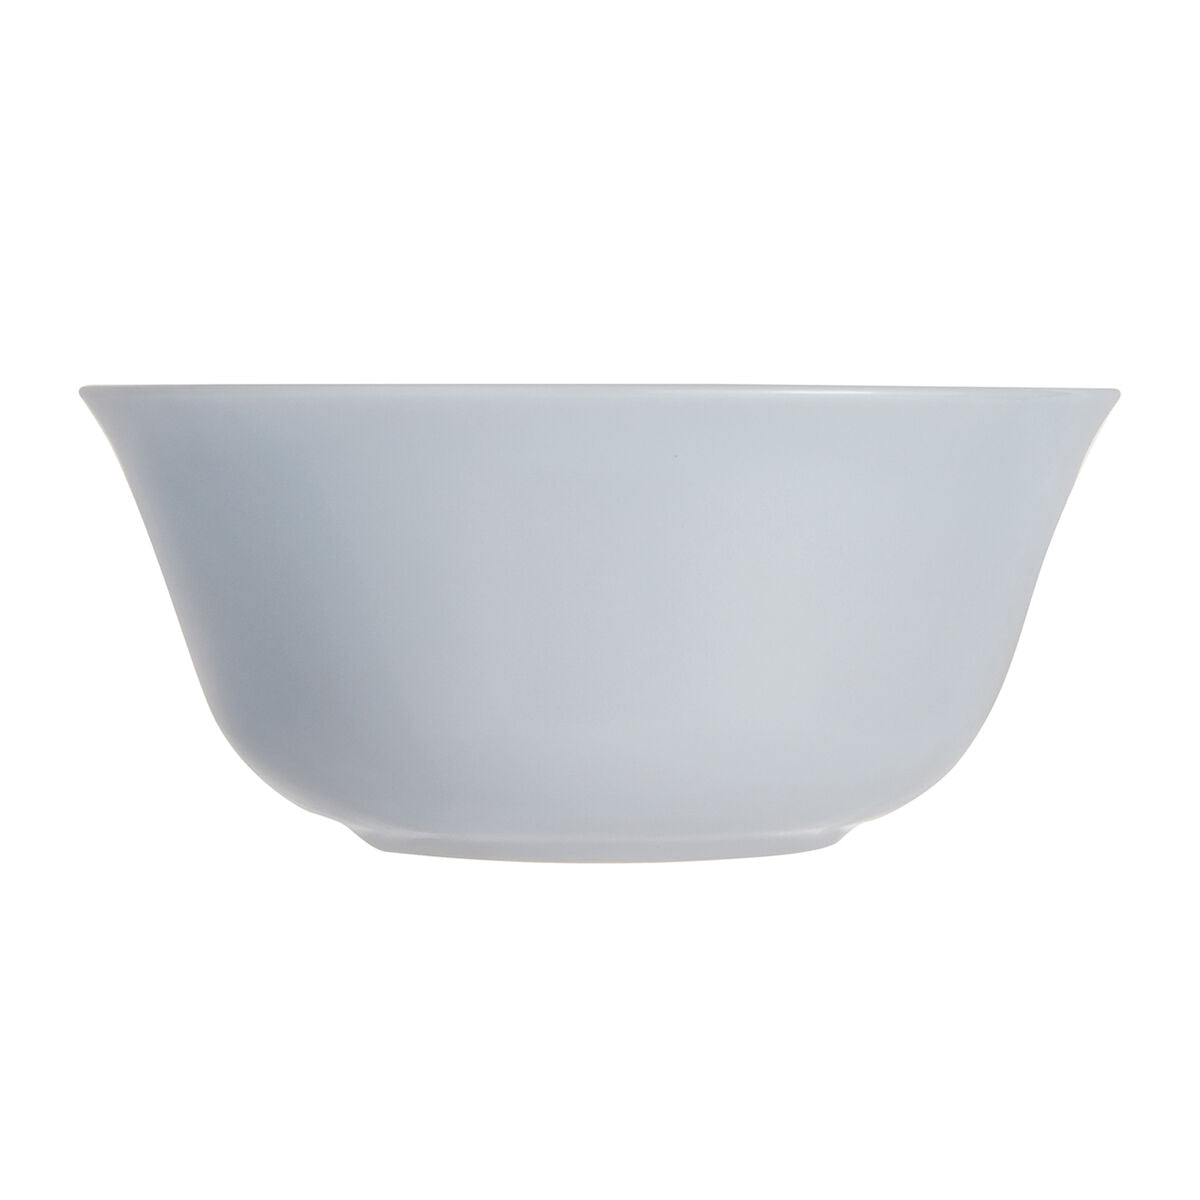 Bowl Luminarc Carine Granit Grey Glass 12 cm Multi-use (24 Units)